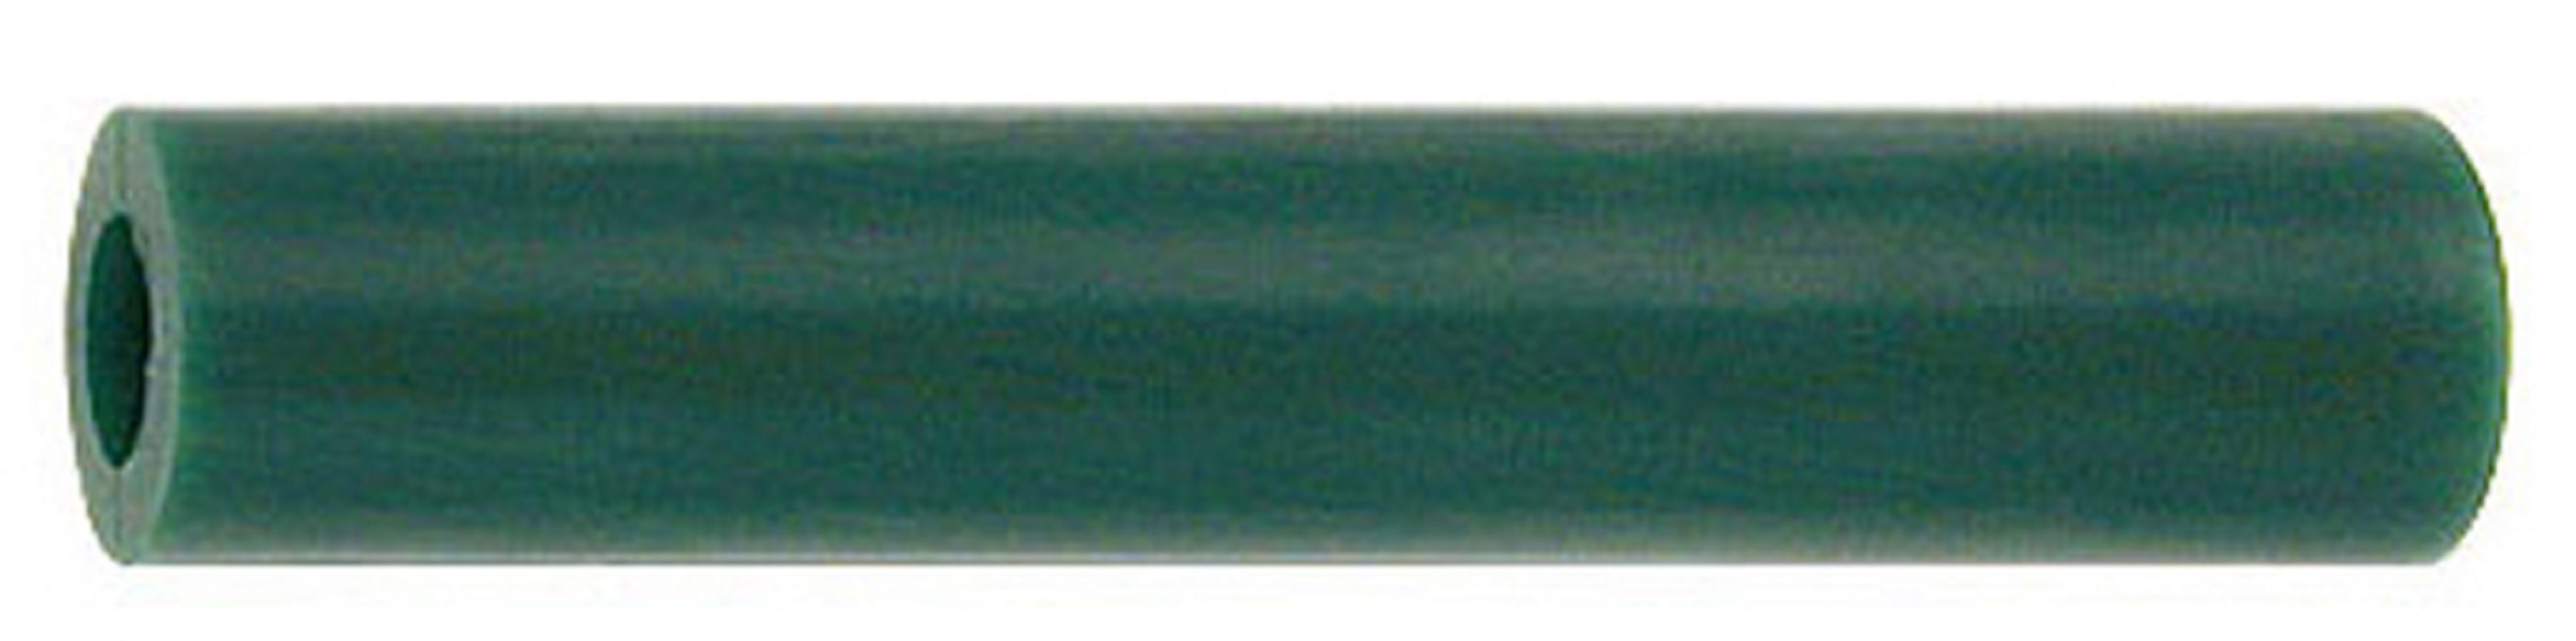 FERRIS FILE-A-WAX TUBE CENTER HOLE GREEN 7/8"x5/8" 22mm x15mm, t875